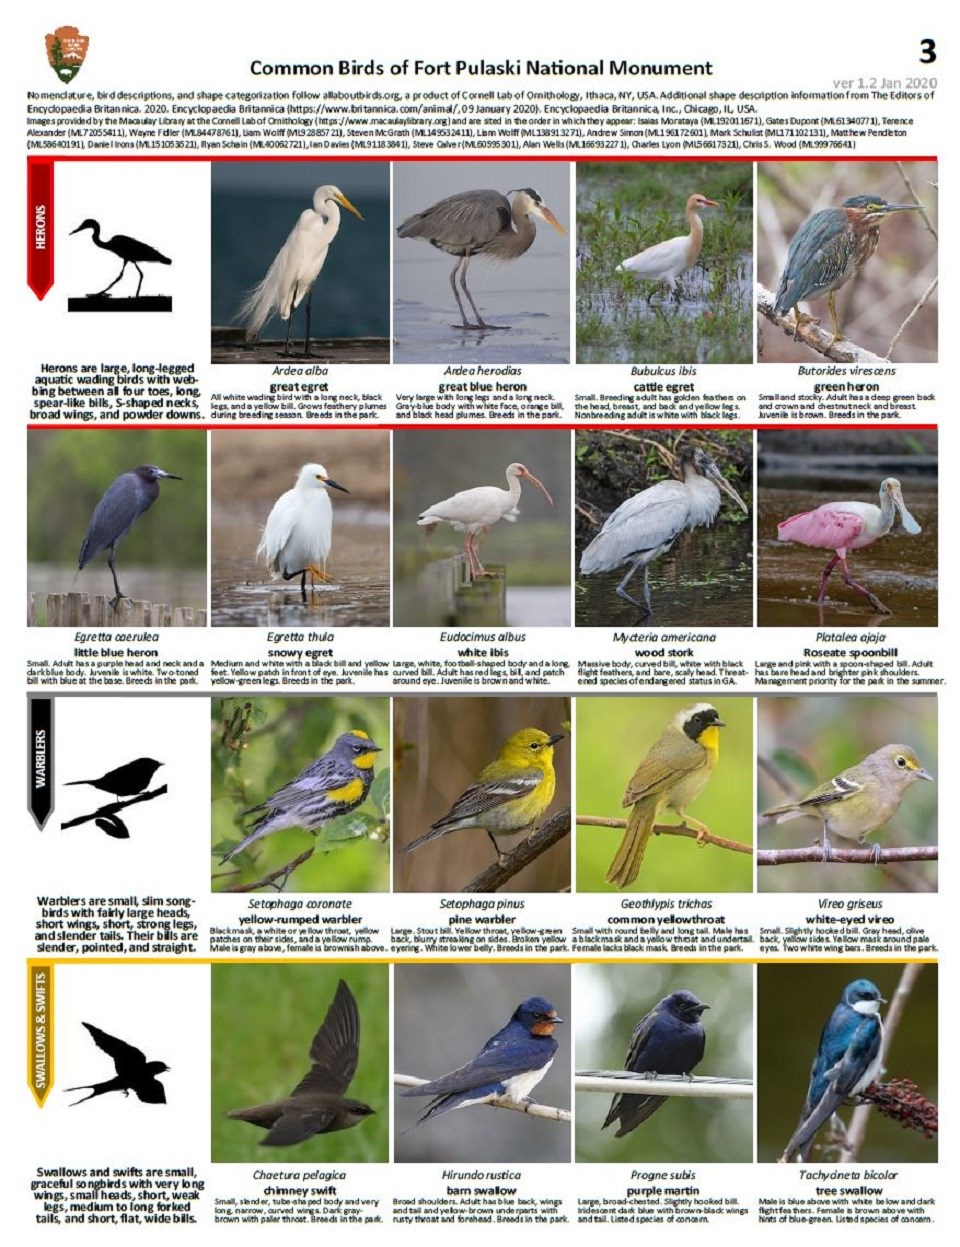 10 Most Common Birds Found in Savannah, GA